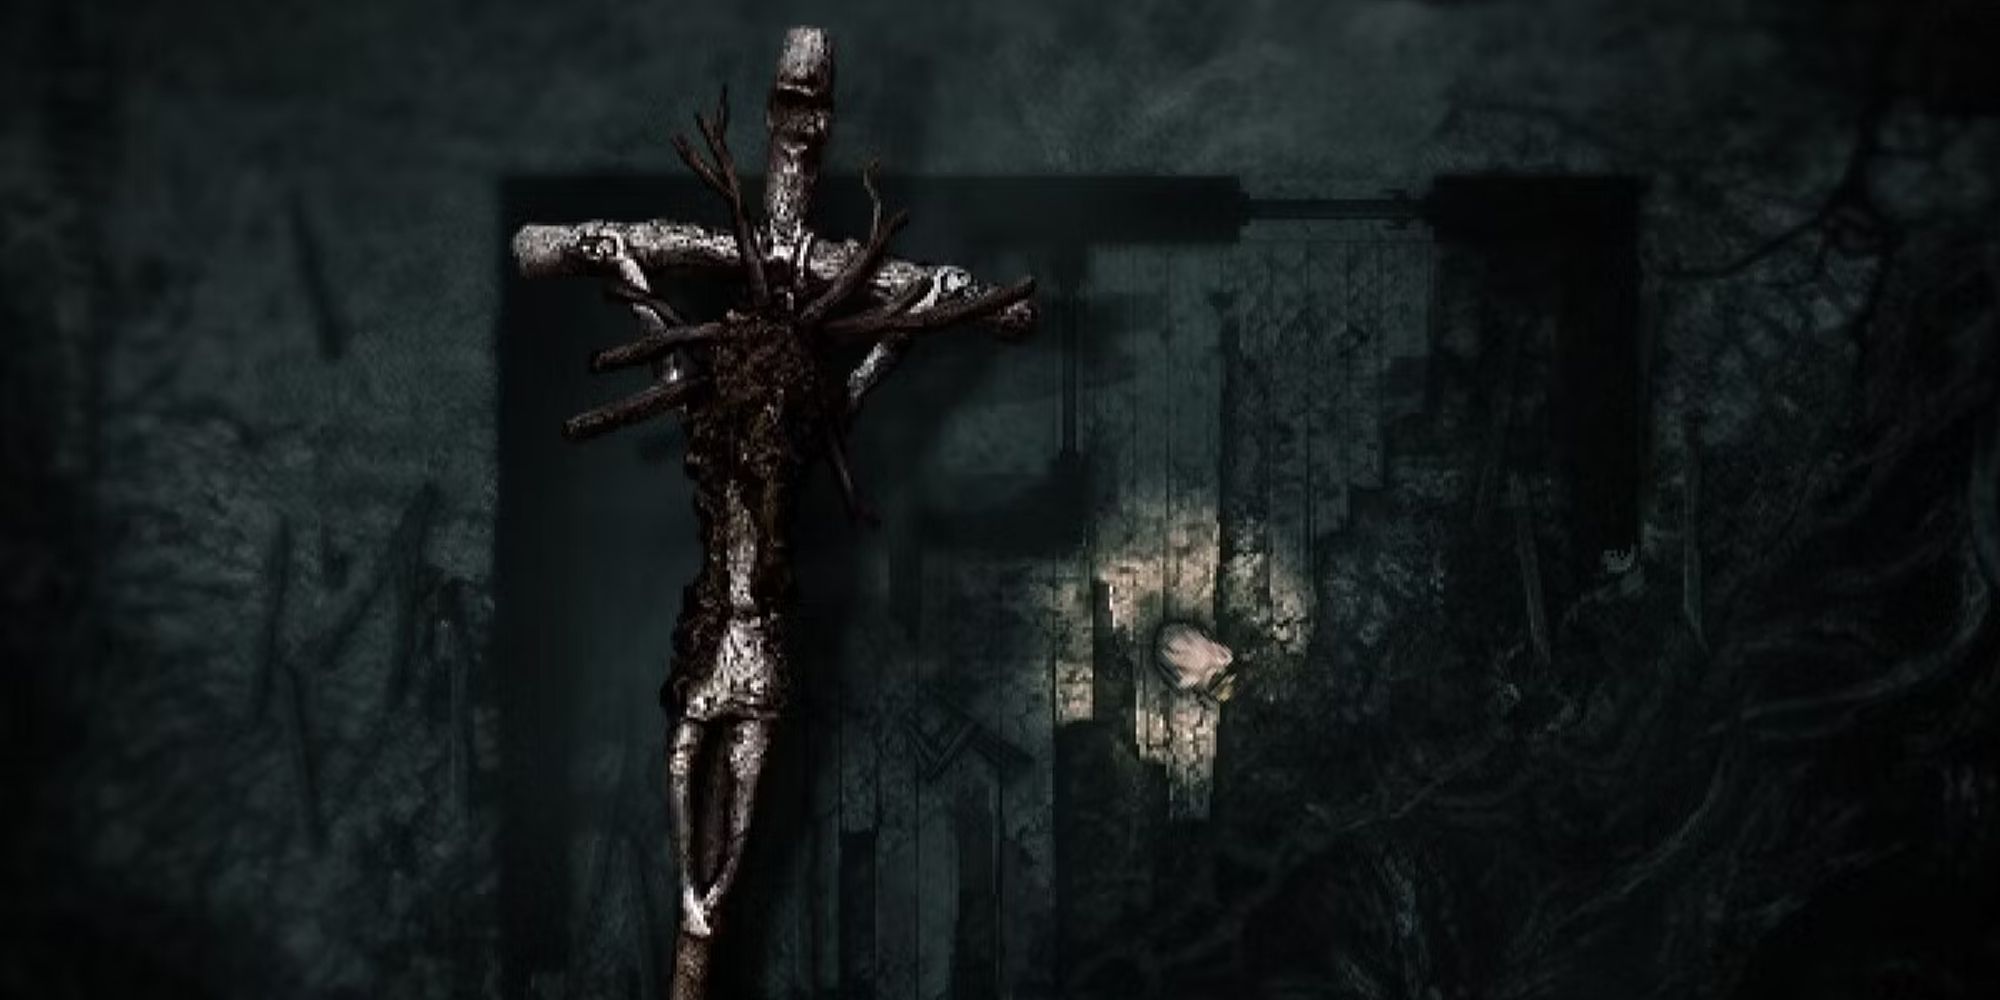 Darkwood An Vision Of A Disturbing Cross